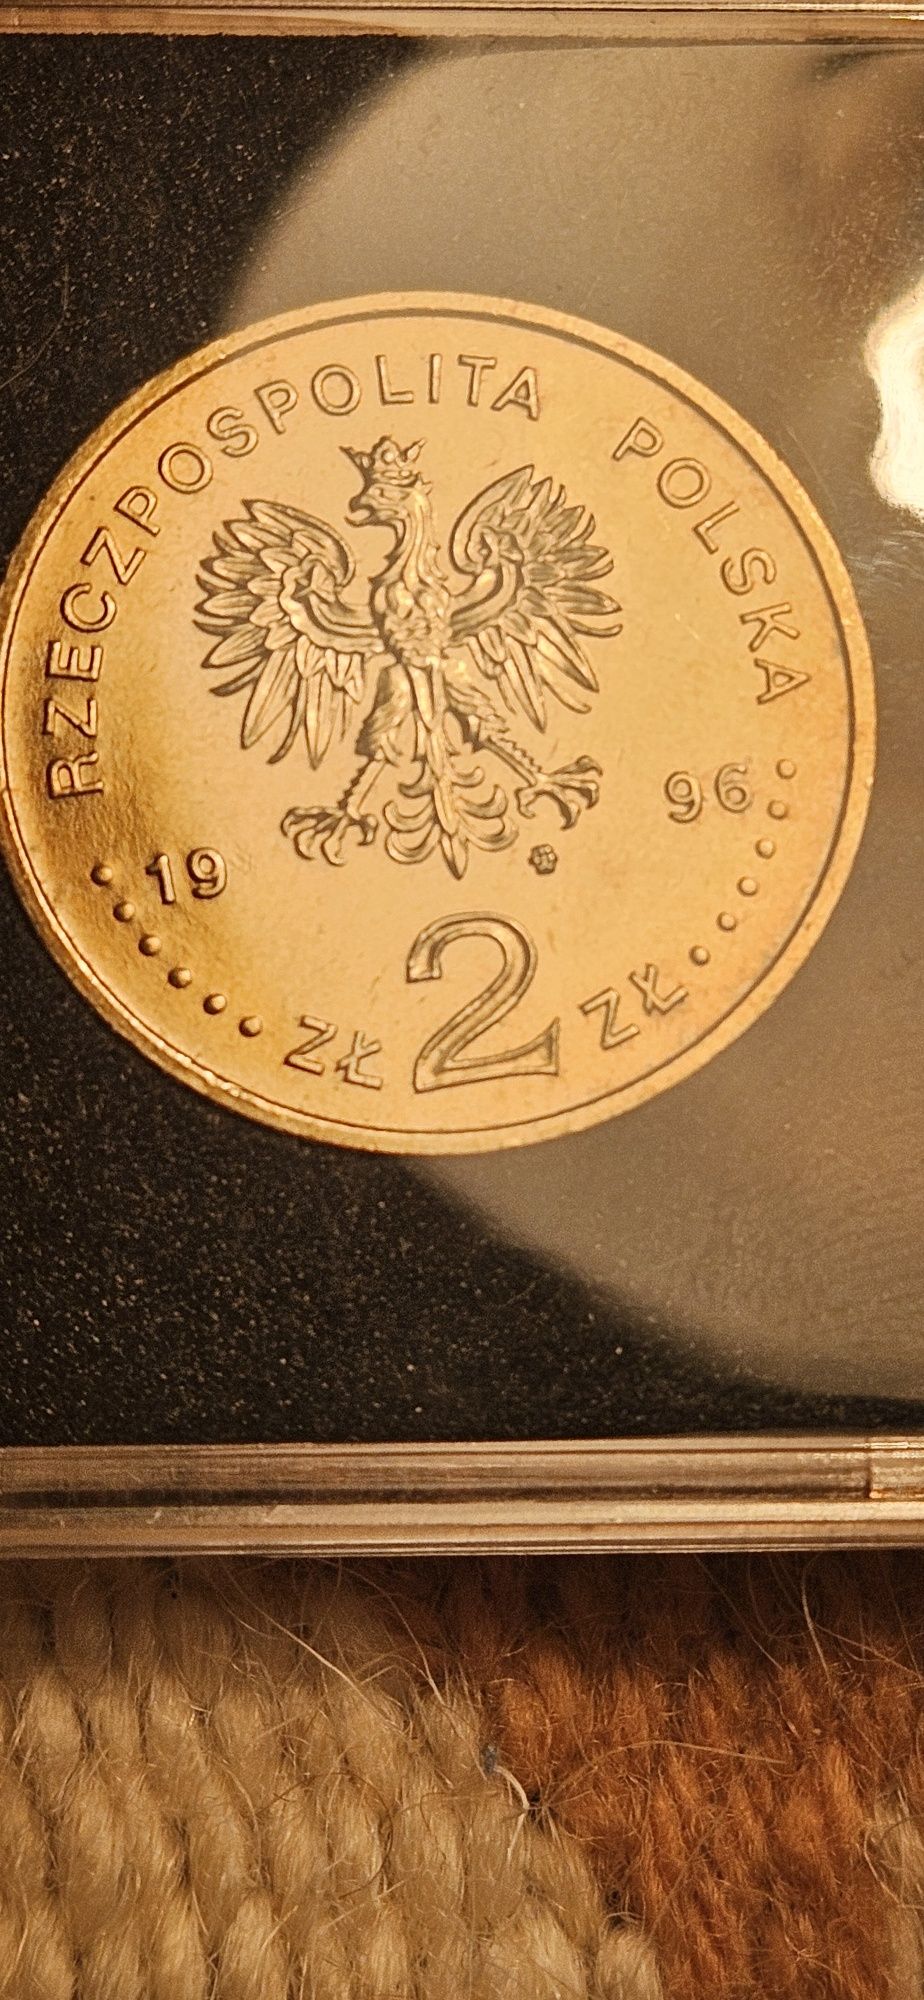 Moneta 2 zł Nordic Gold Zygmunt II August